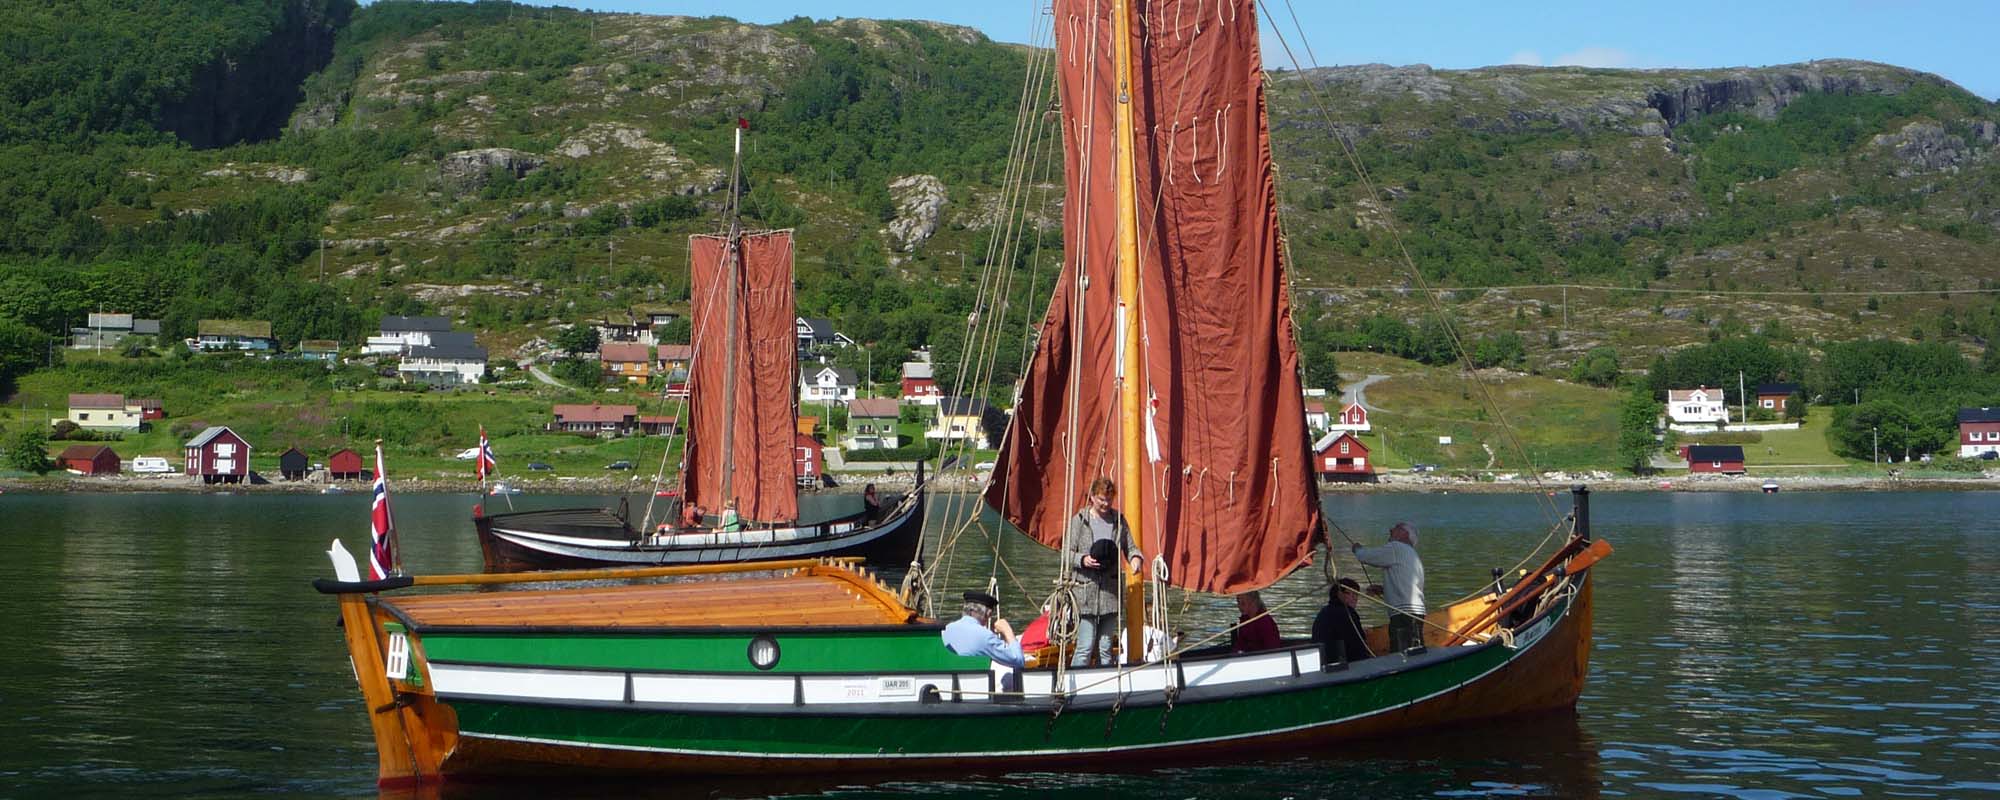 Åfjordsbåten Kystlag